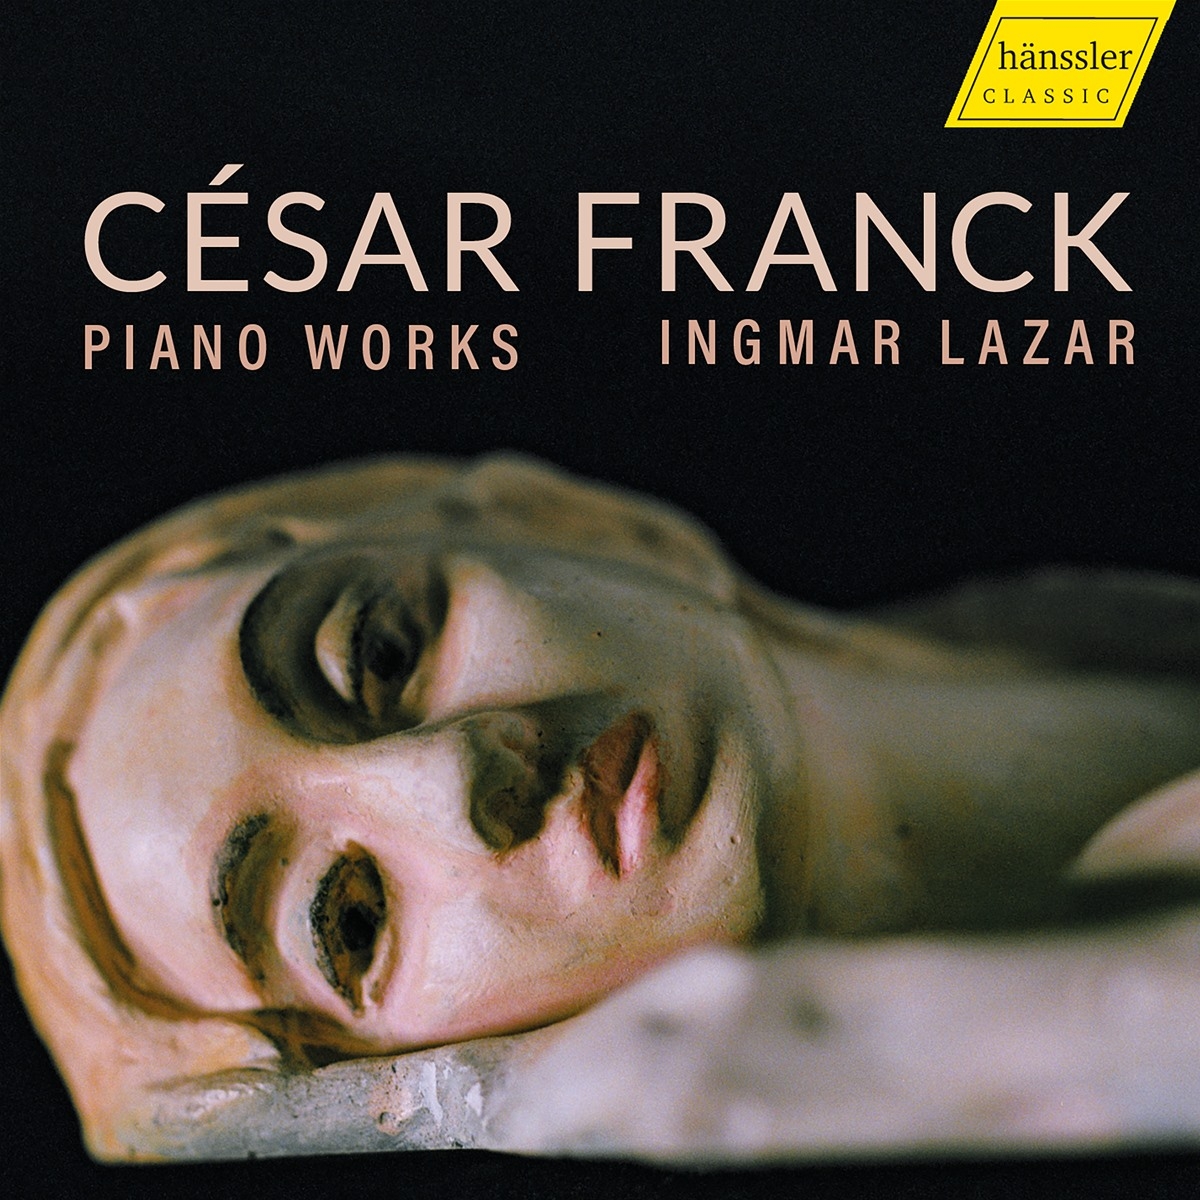 César Franck Piano Works